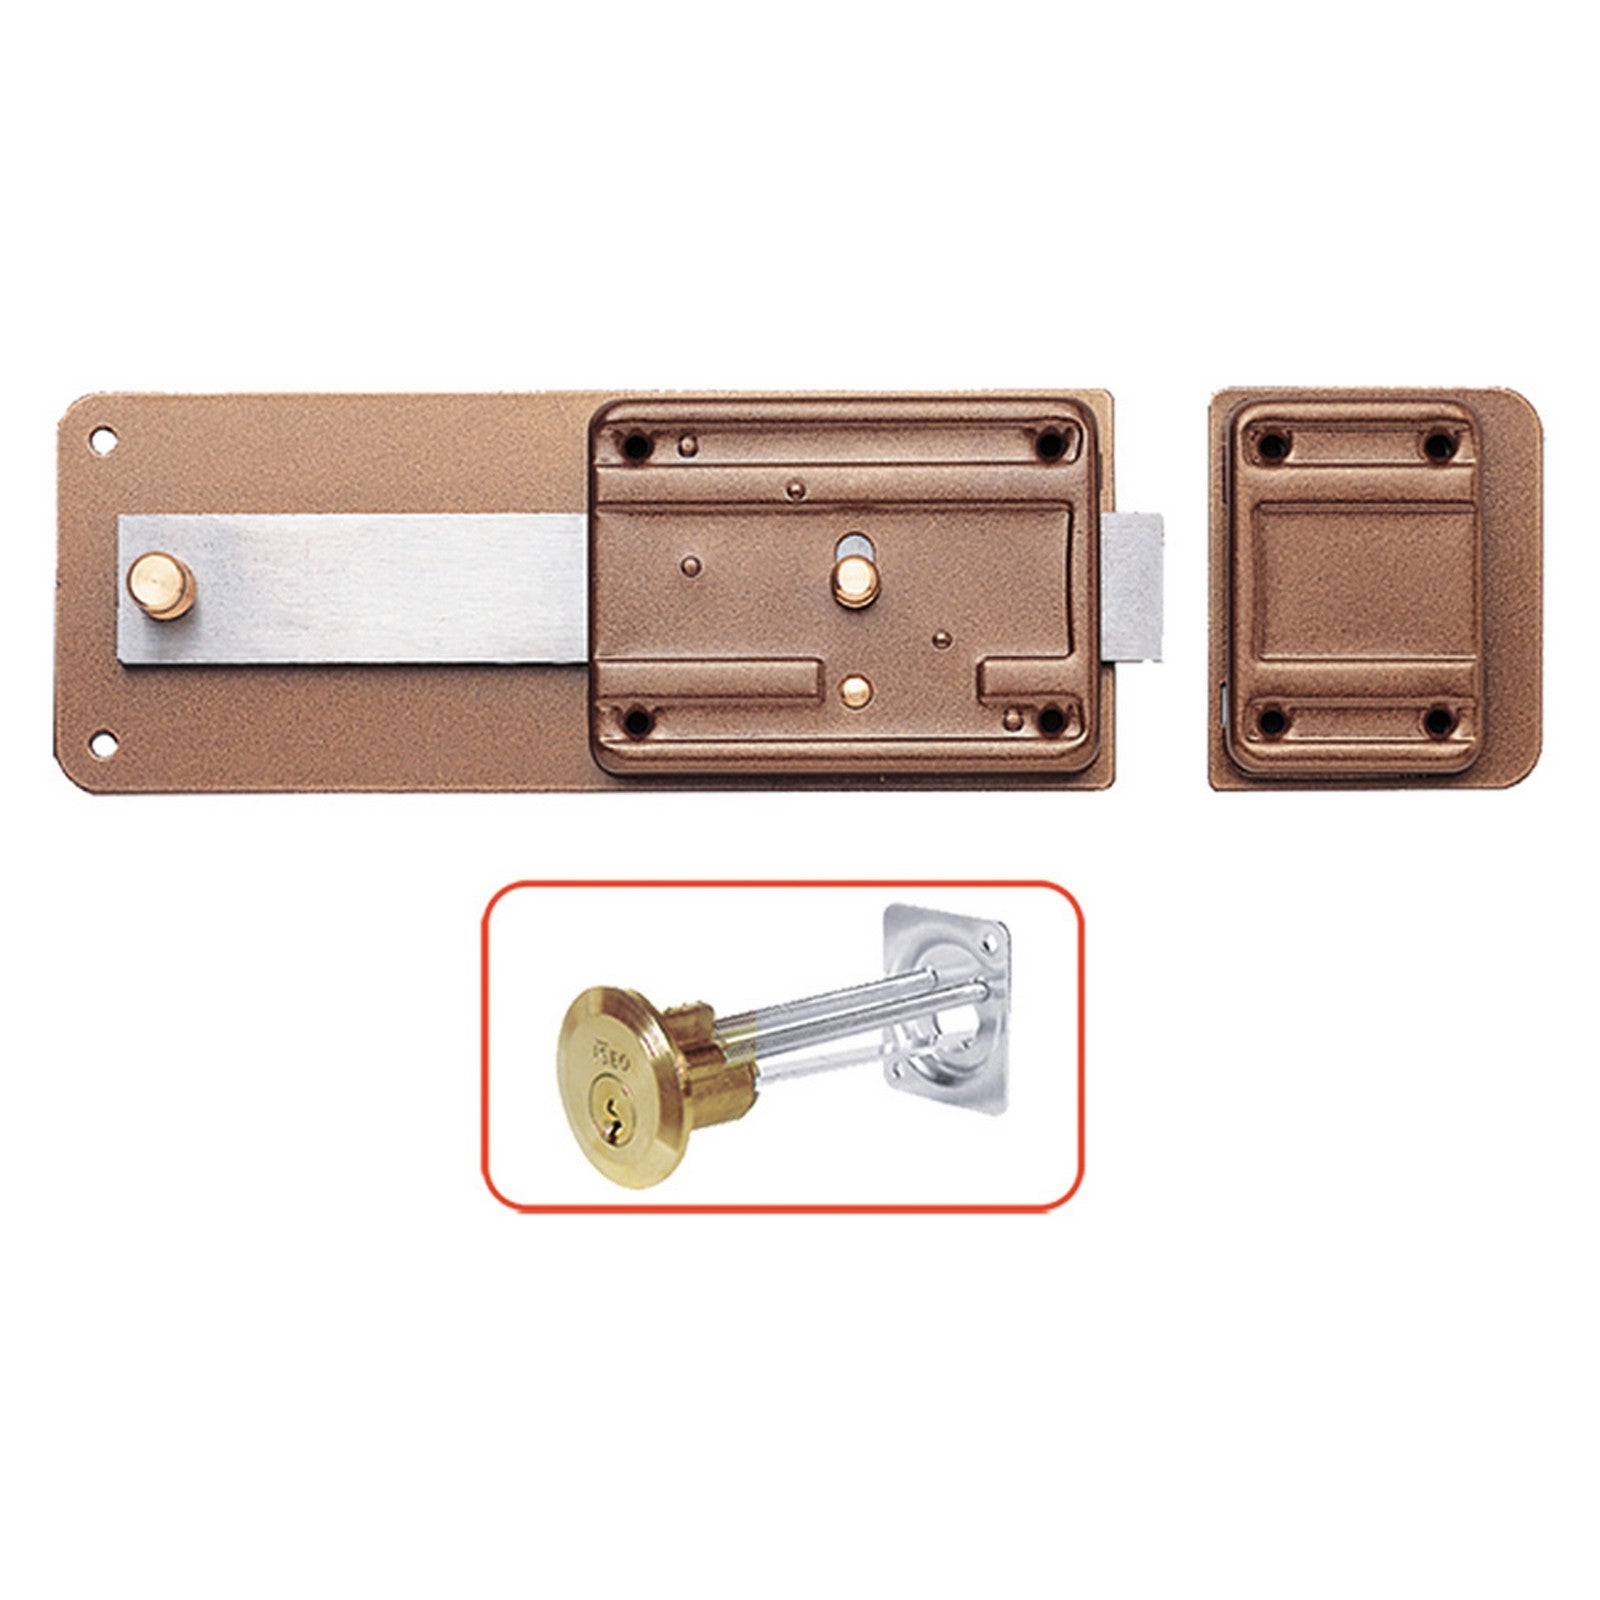 2pz serratura ferroglietto da applicare art. 320 7 1/2 mandate - e 50 cod:ferx.301742nlm